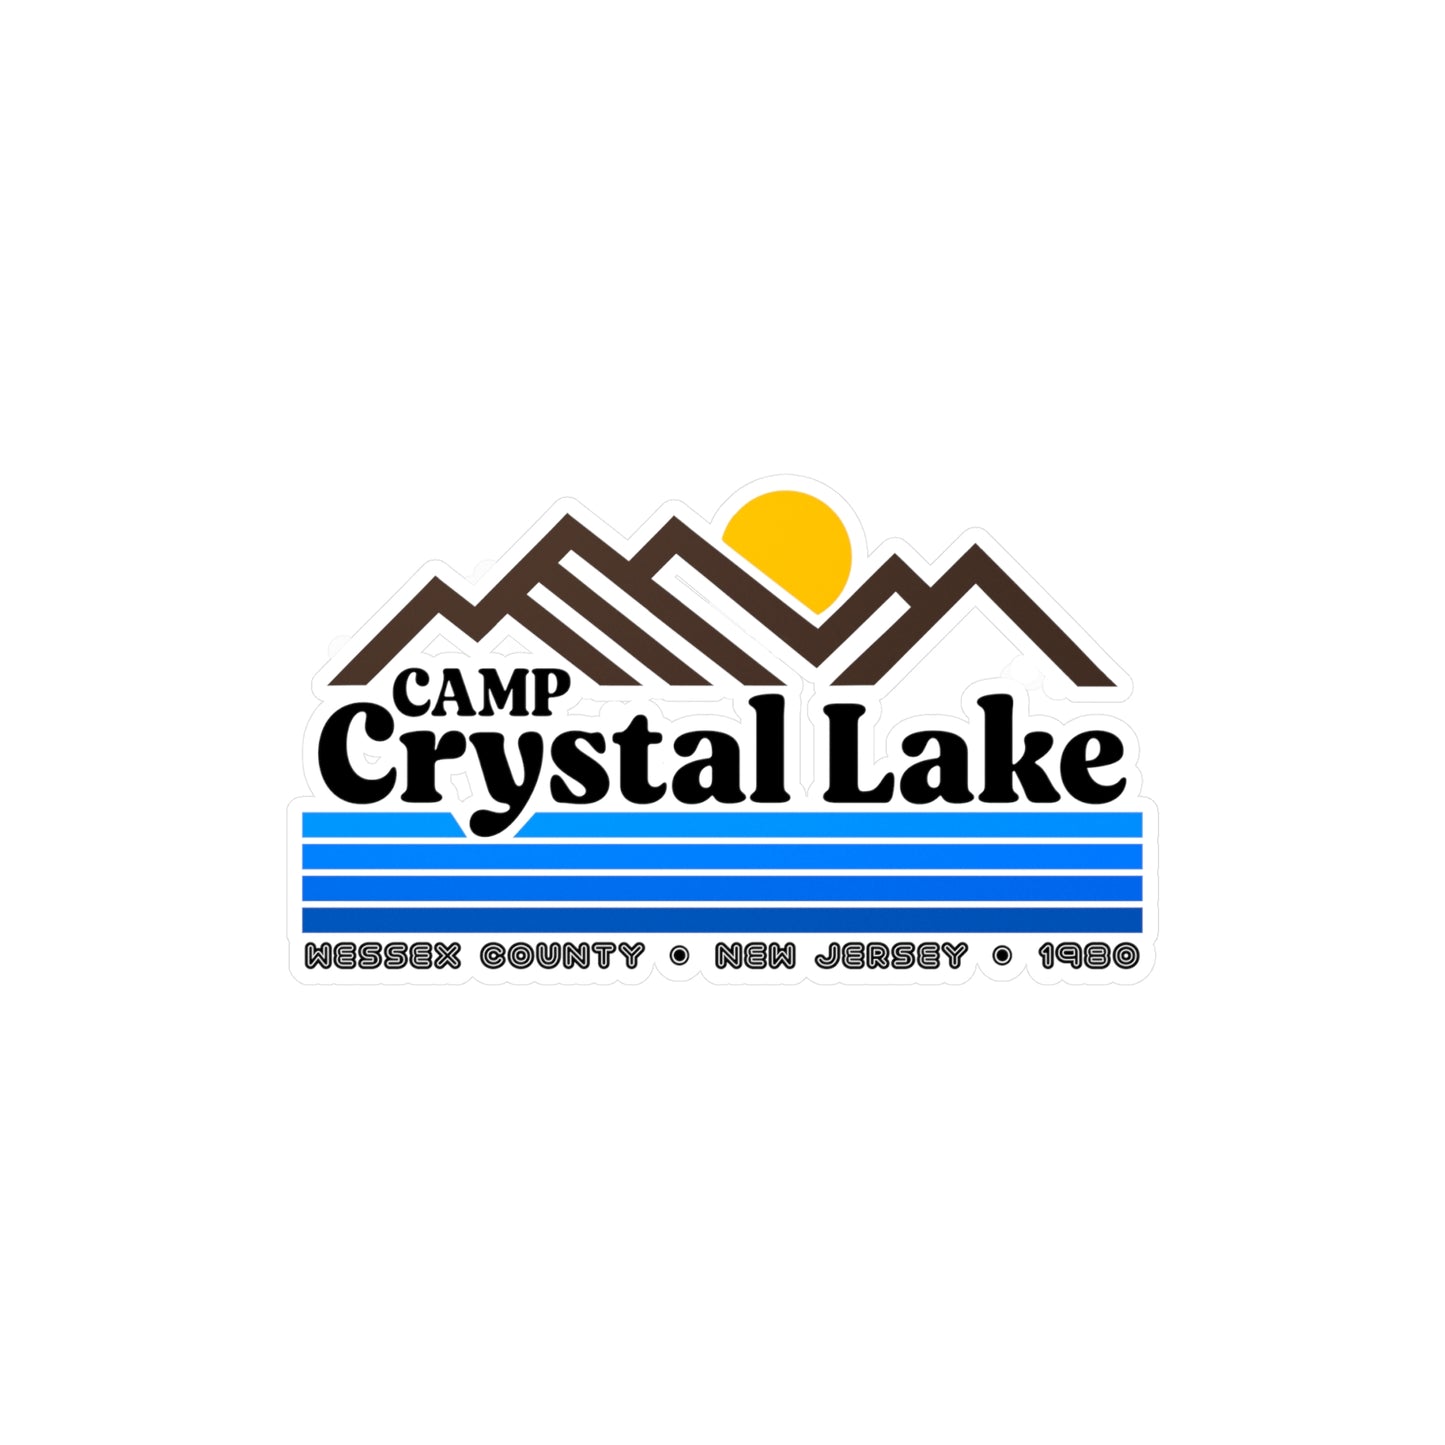 Camp Crystal Lake Vinyl Decal (Color)